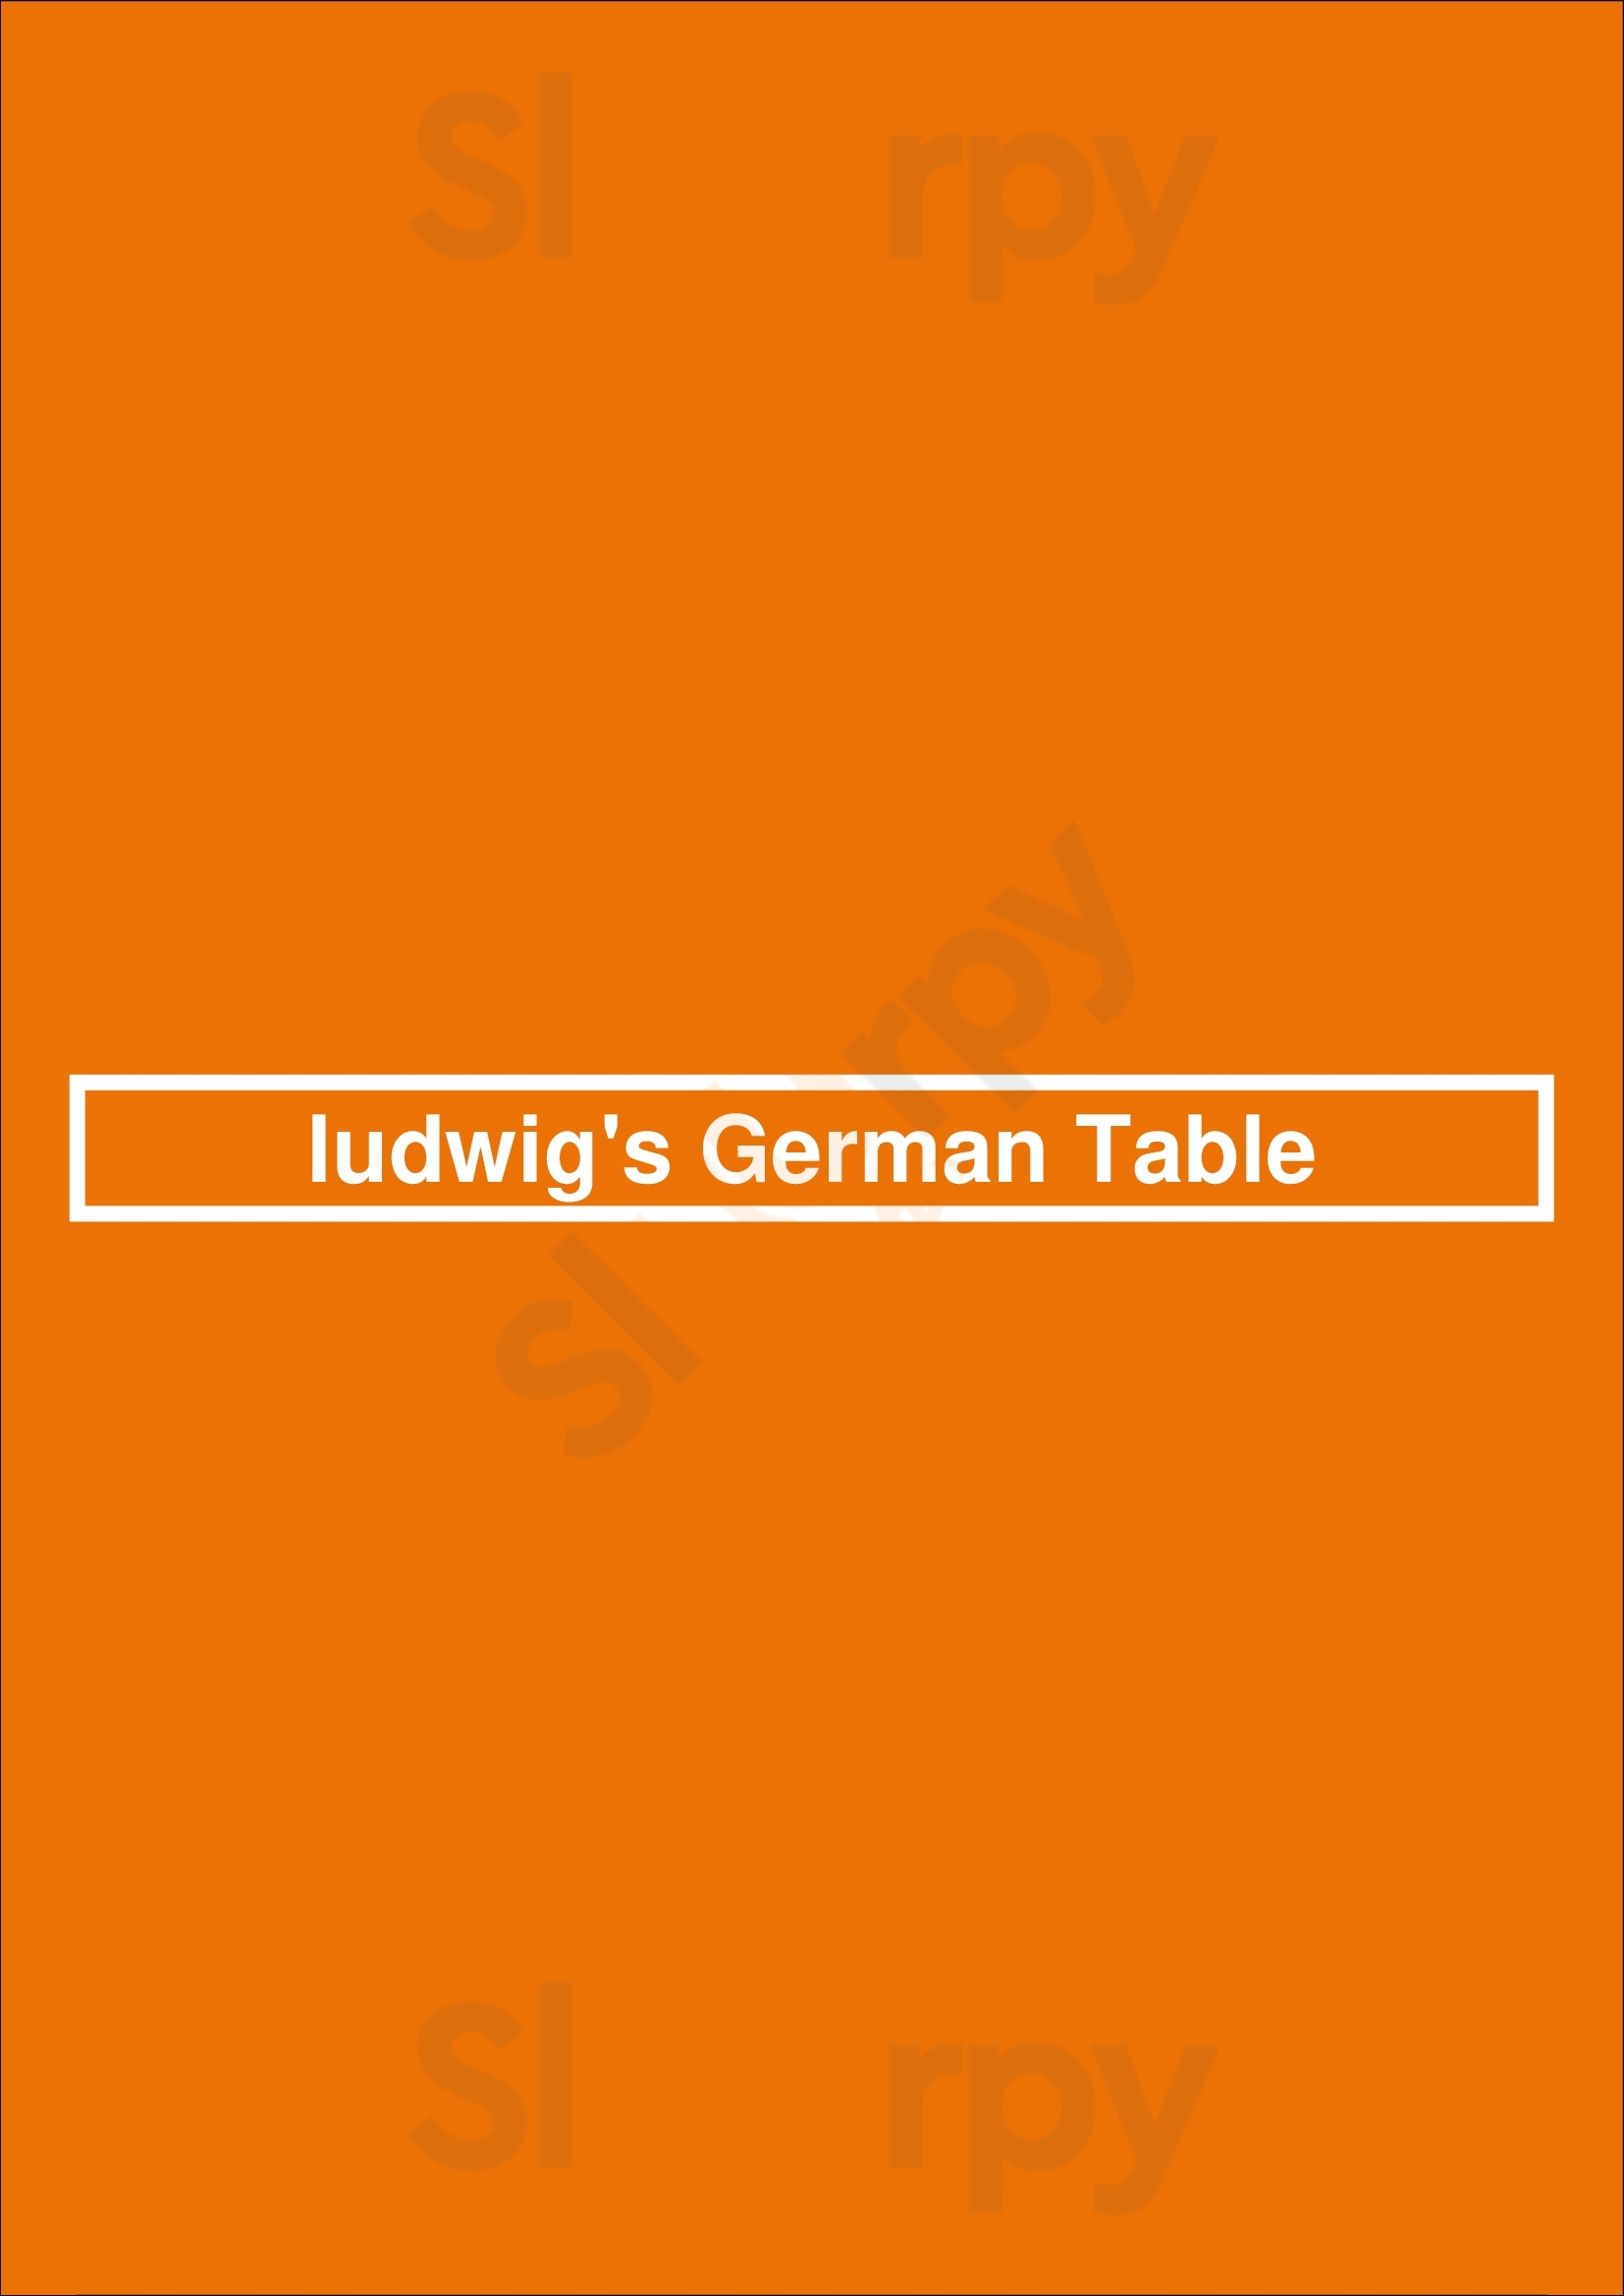 Ludwig's German Table San Jose Menu - 1